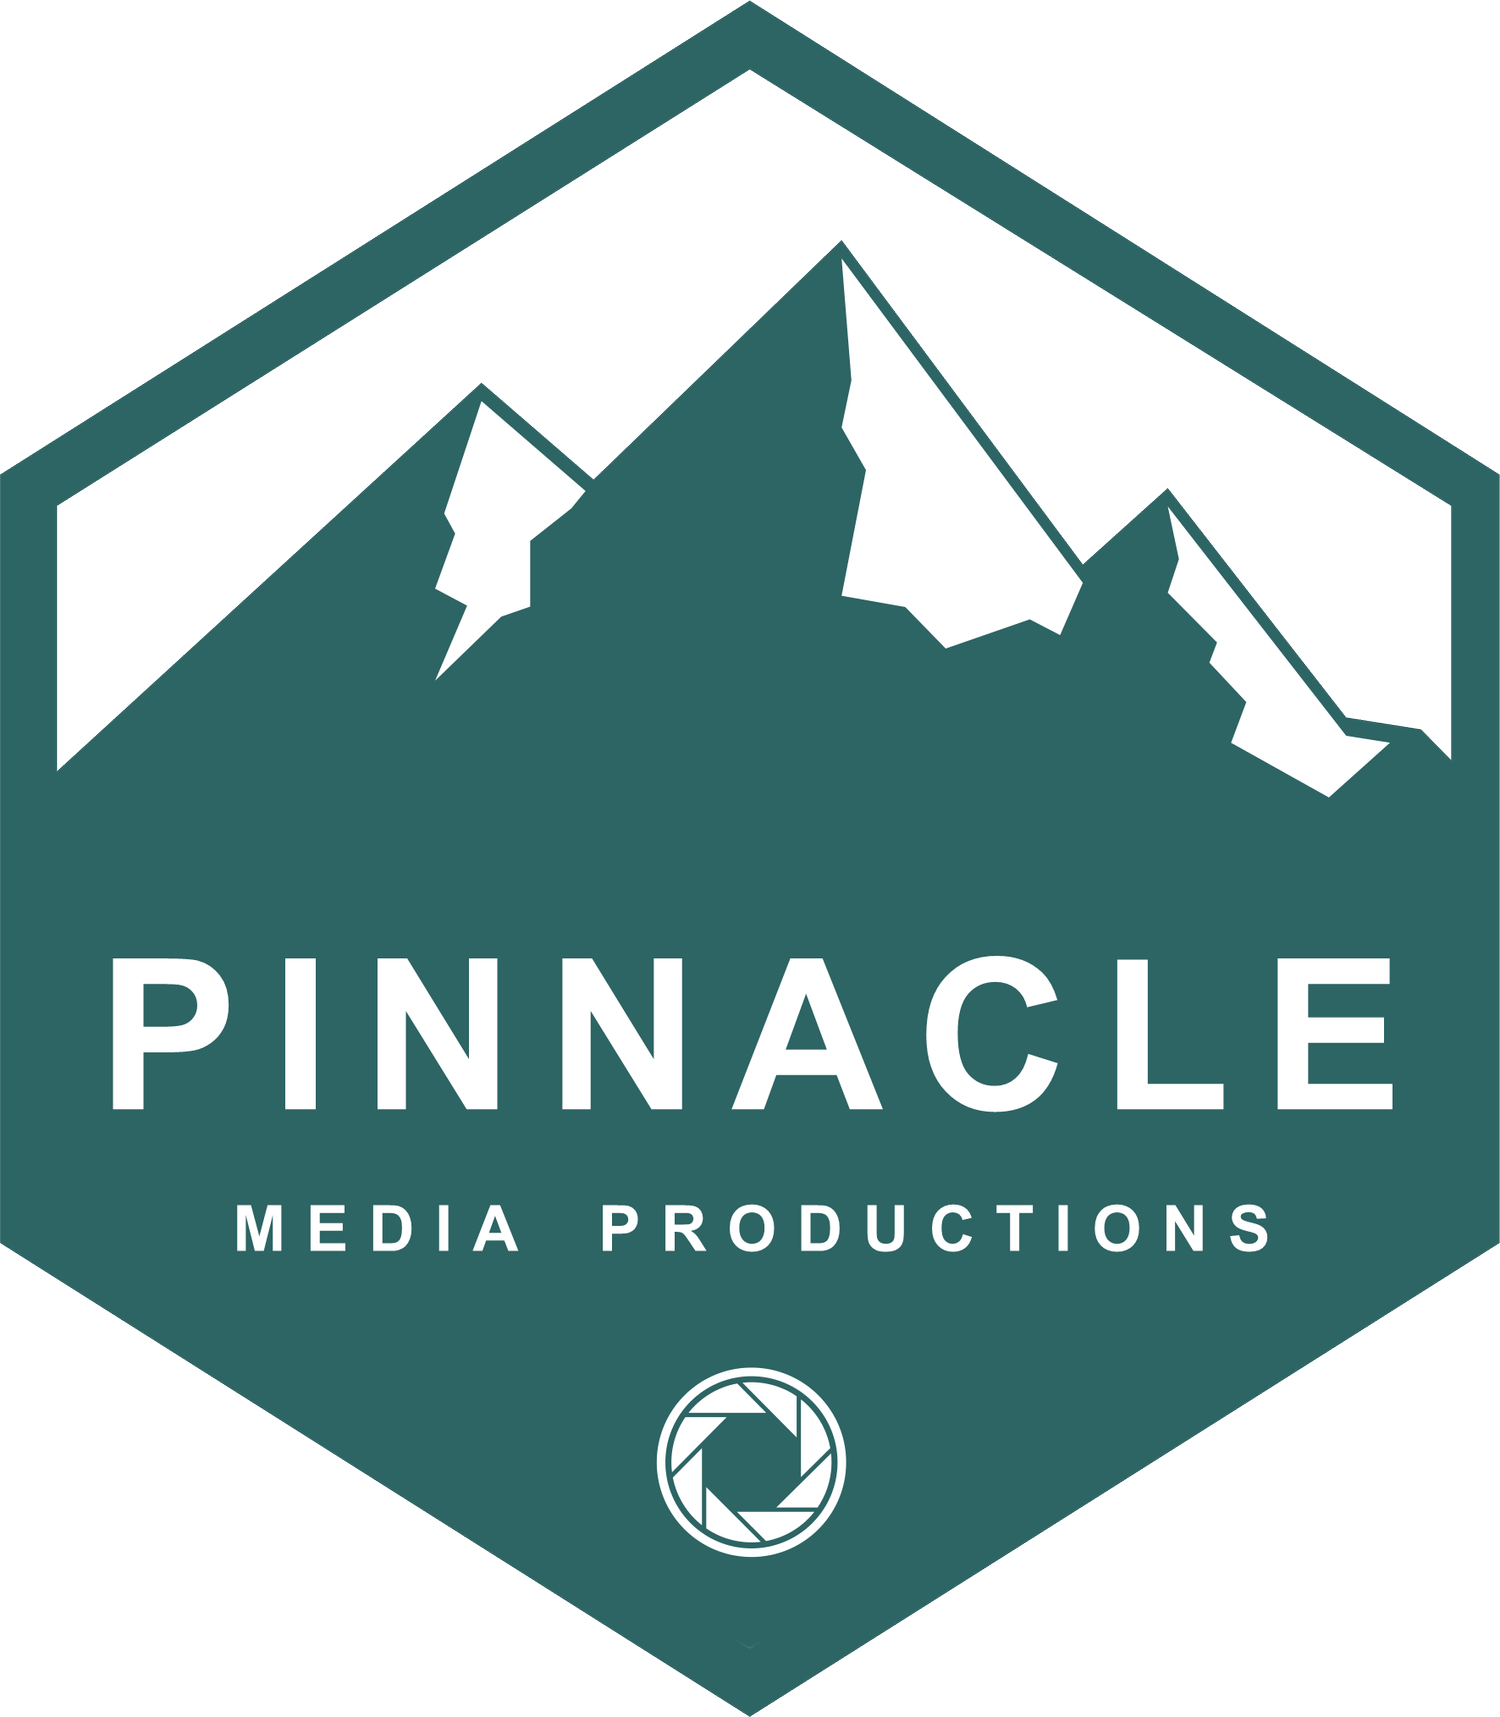 Pinnacle Media Productions